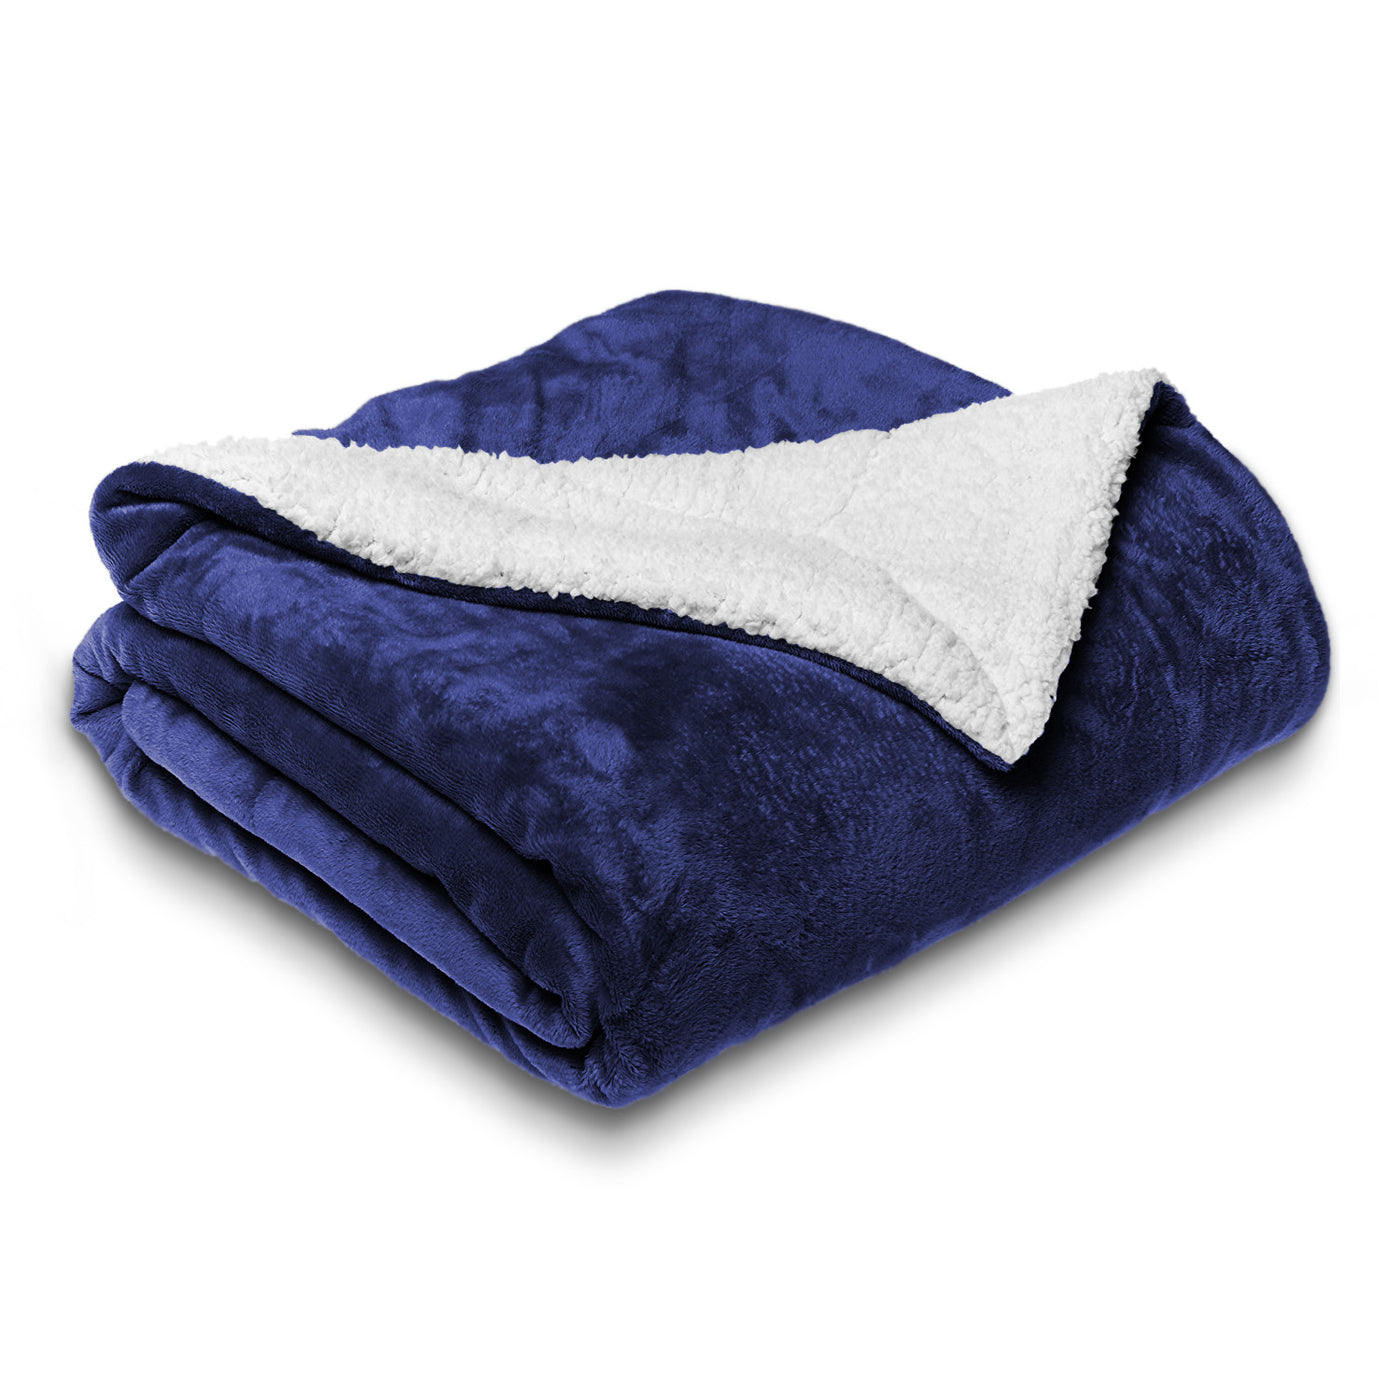 Sherpa Fleece Throw Blanket Navy Blue